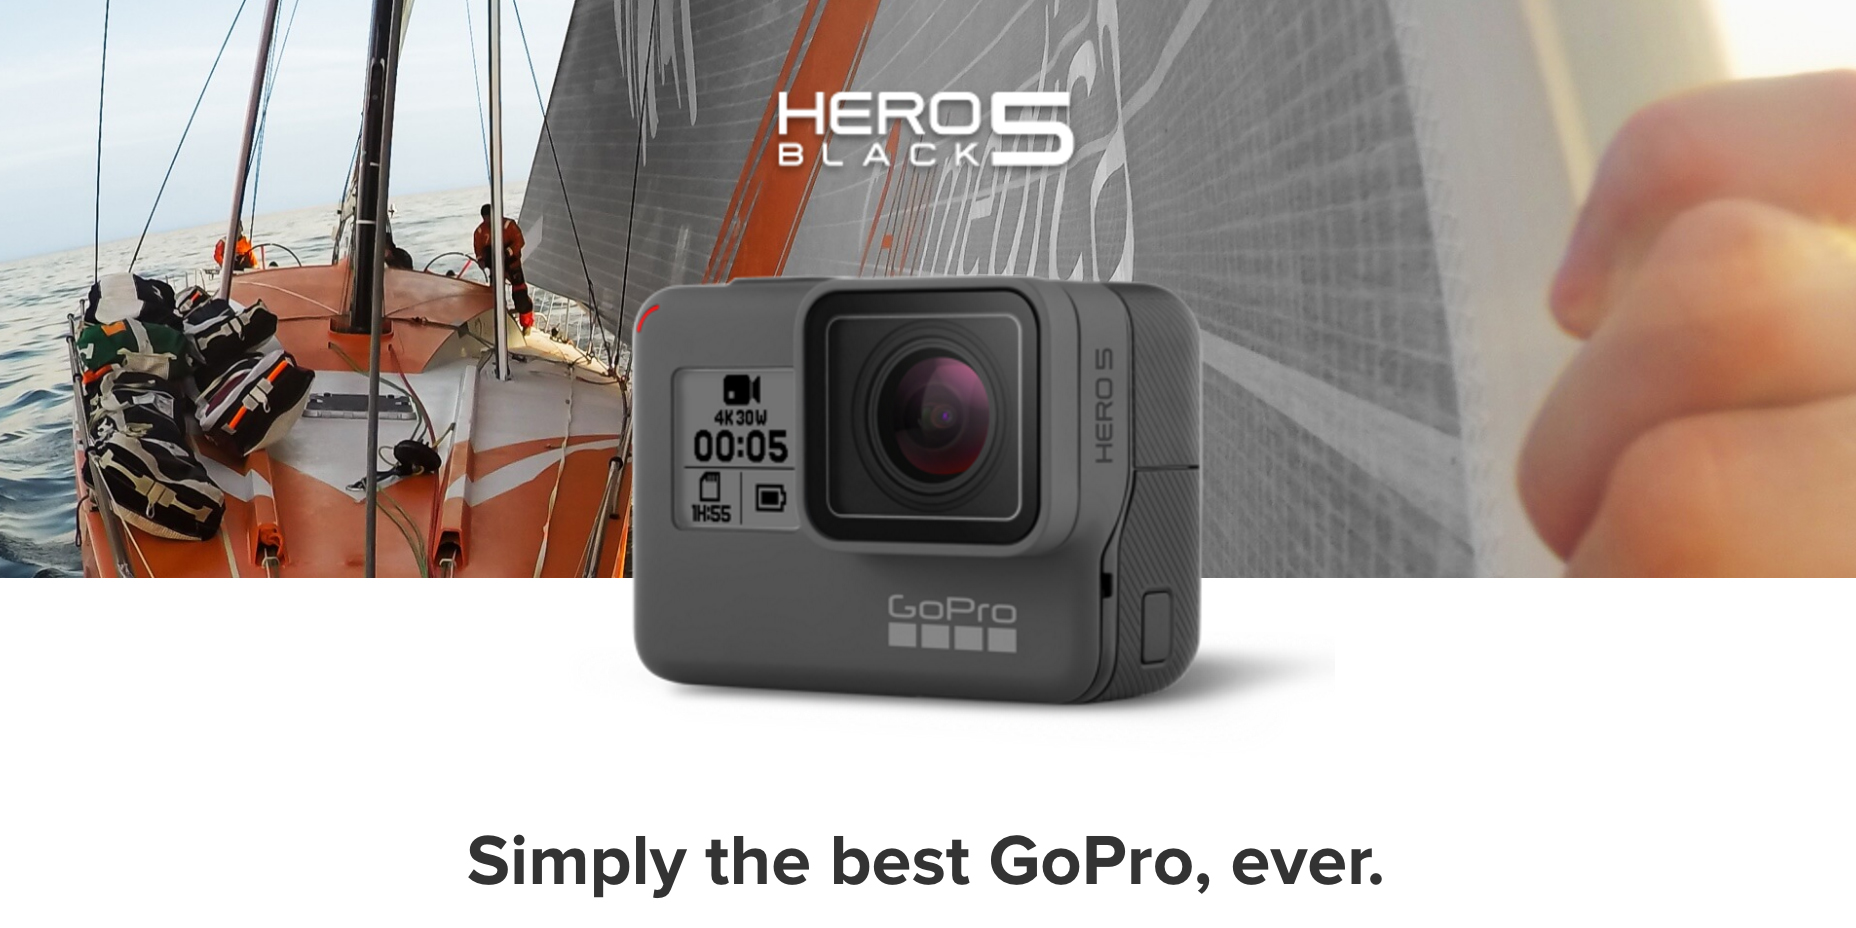 Capture it all w/ GoPro's HERO5 Black 4K camera for $254 shipped (Reg